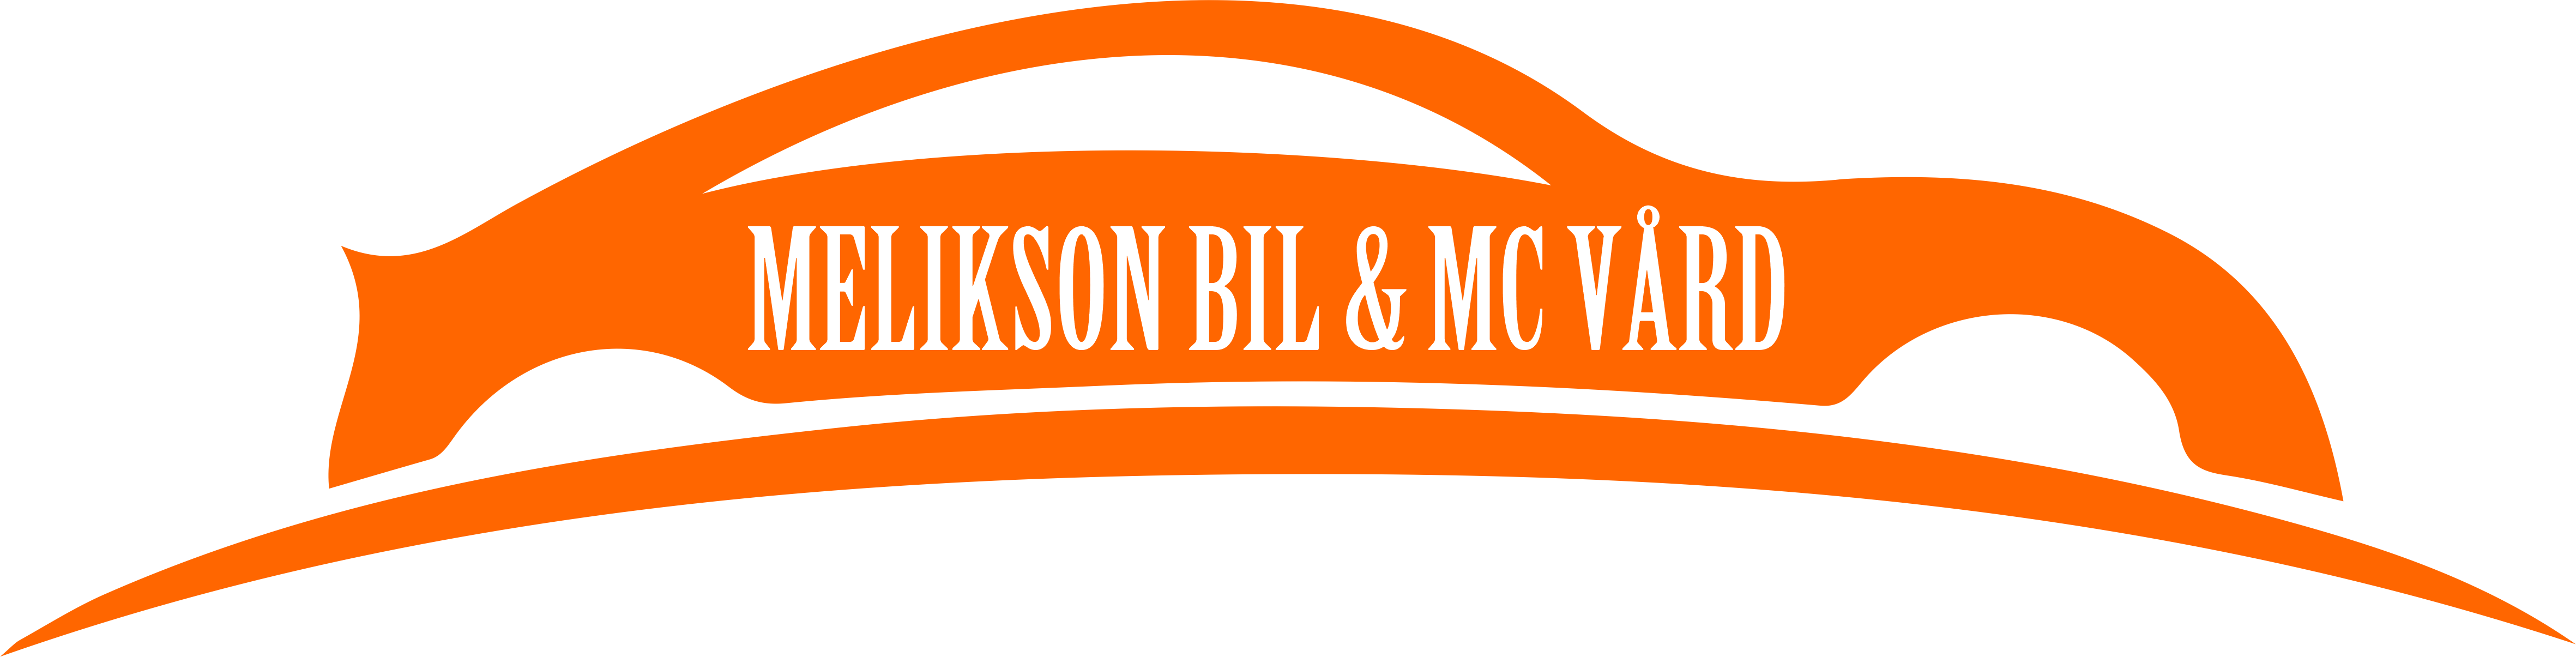 Melikson Bilservice  logo